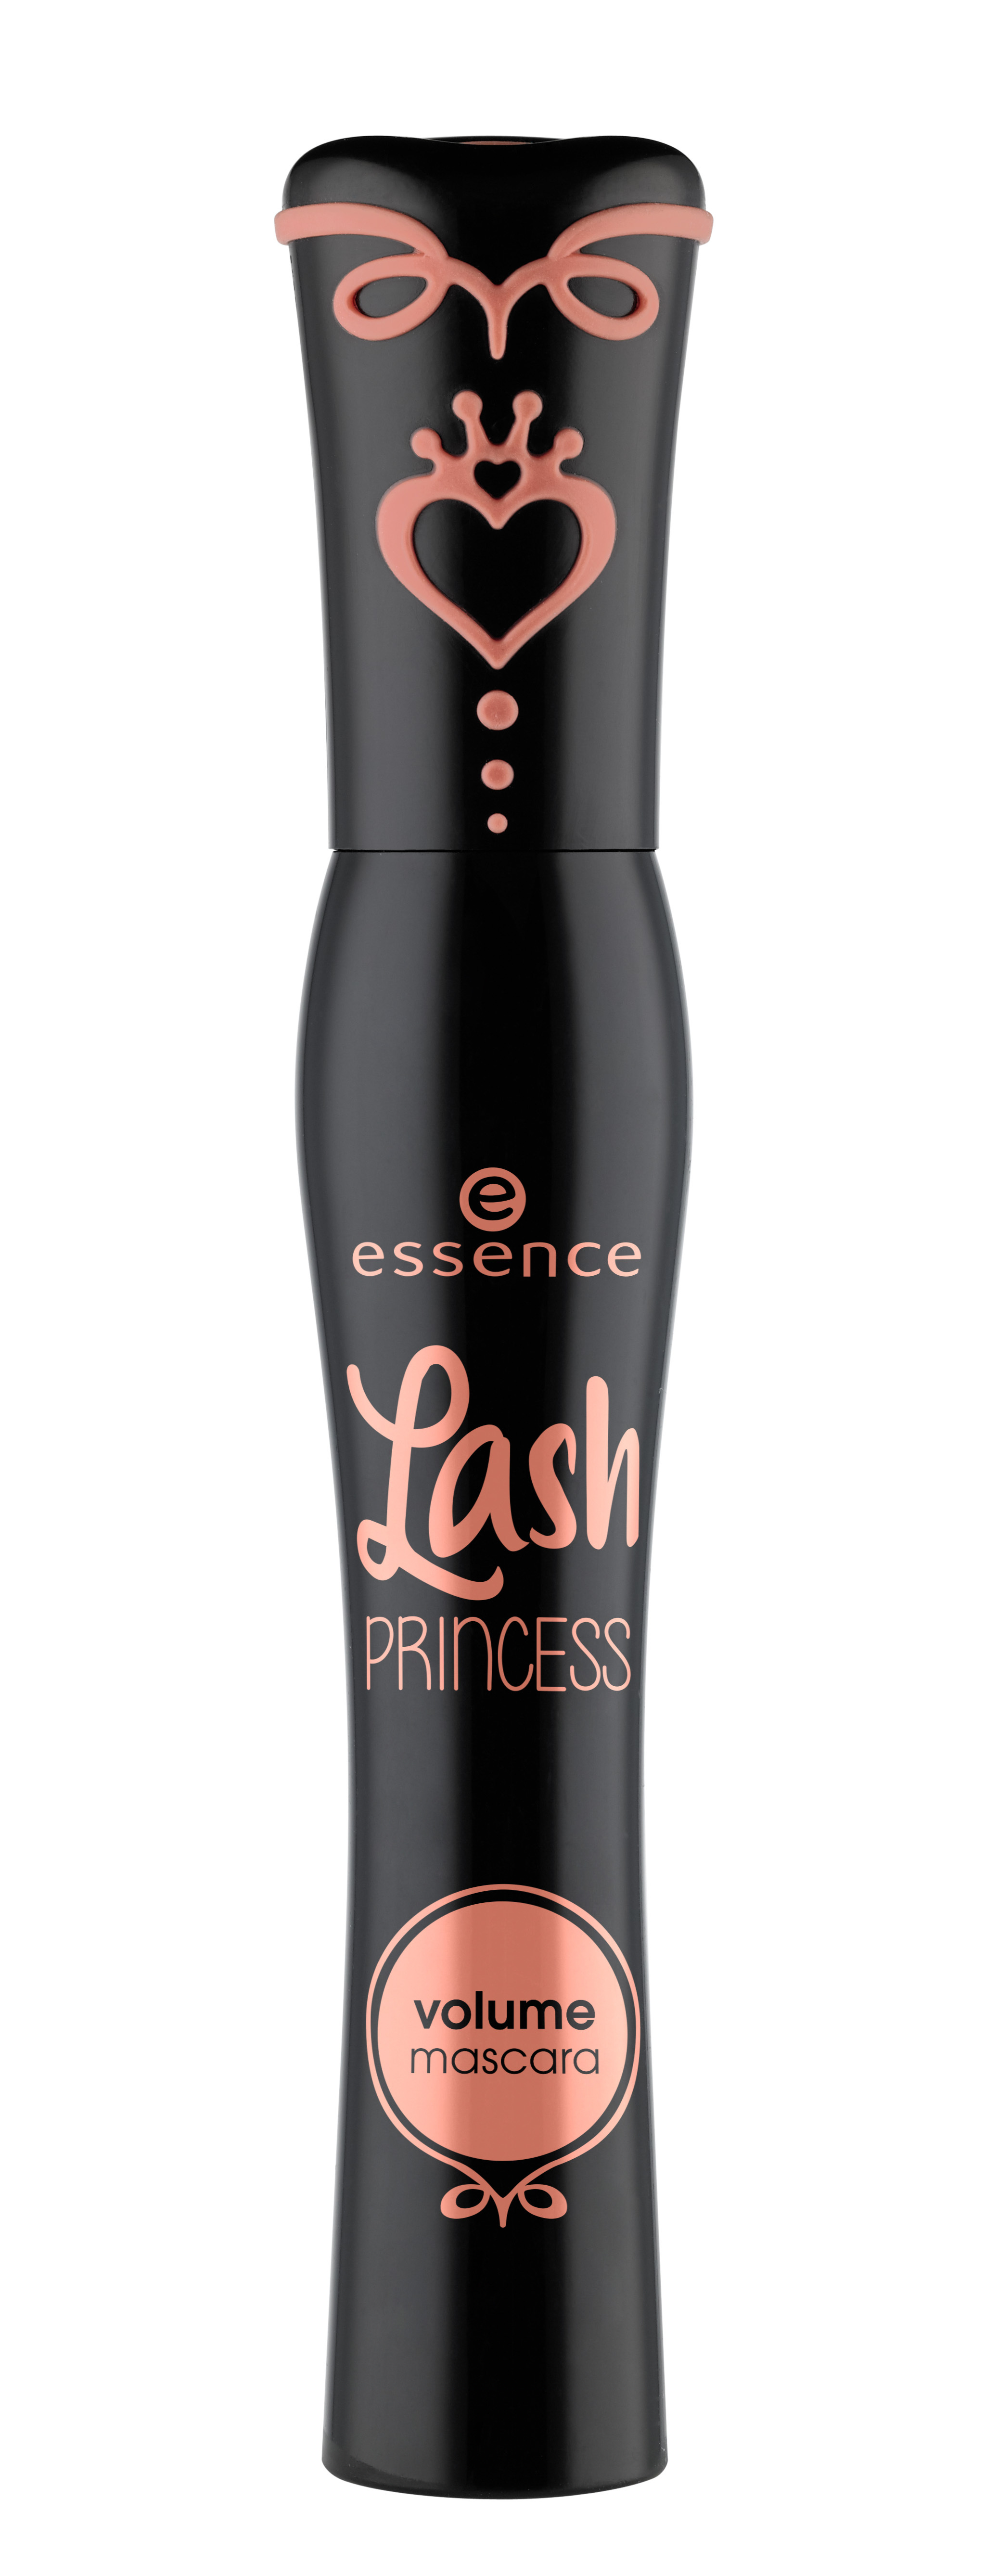 Essence volume mascara lash princess